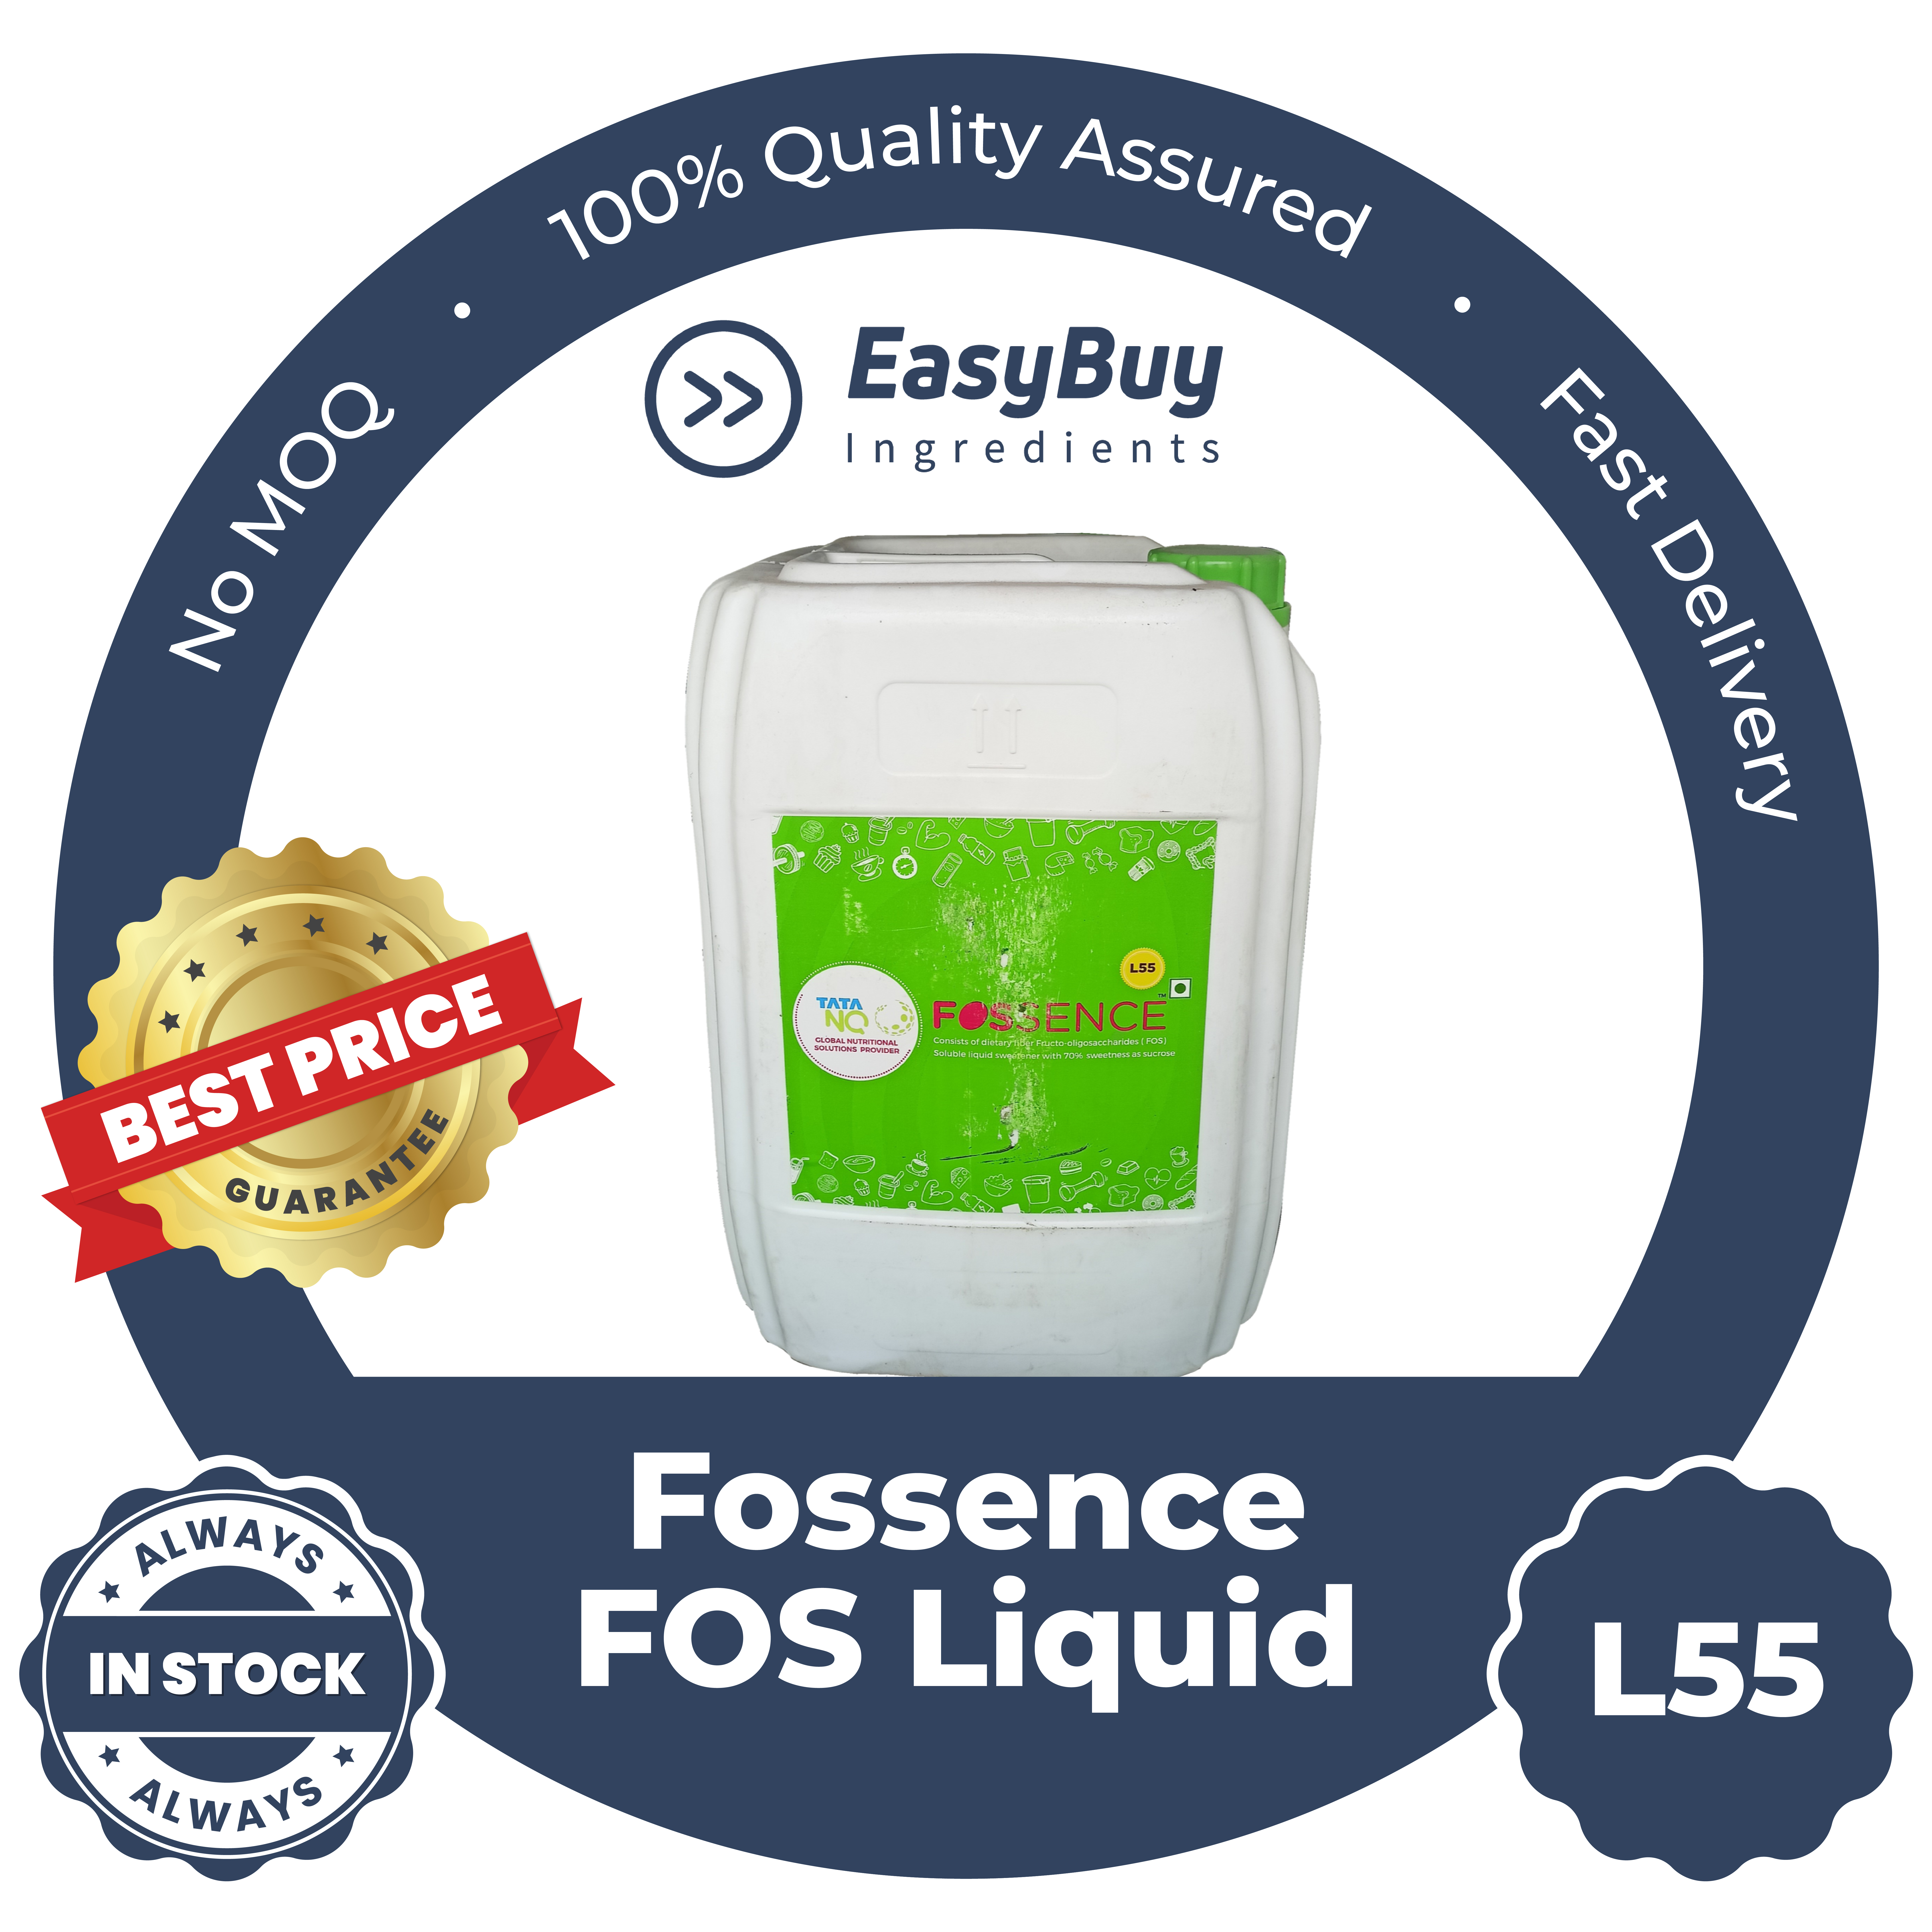 FOS Liquid L55 by Tata Chemicals